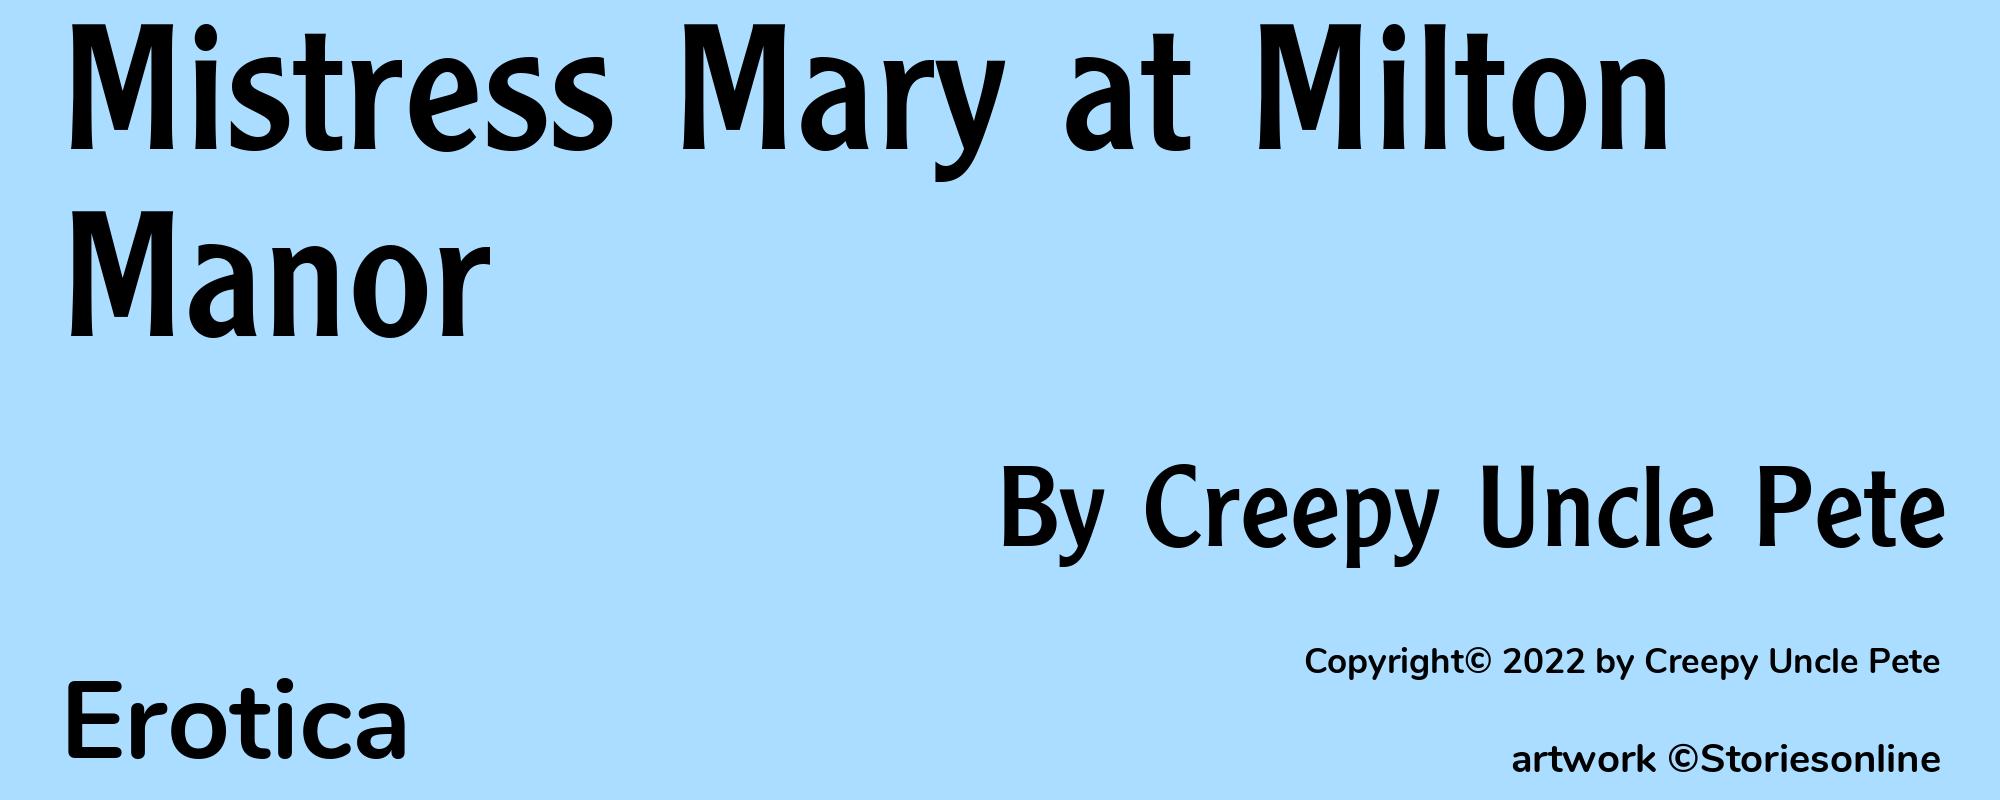 Mistress Mary at Milton Manor - Cover